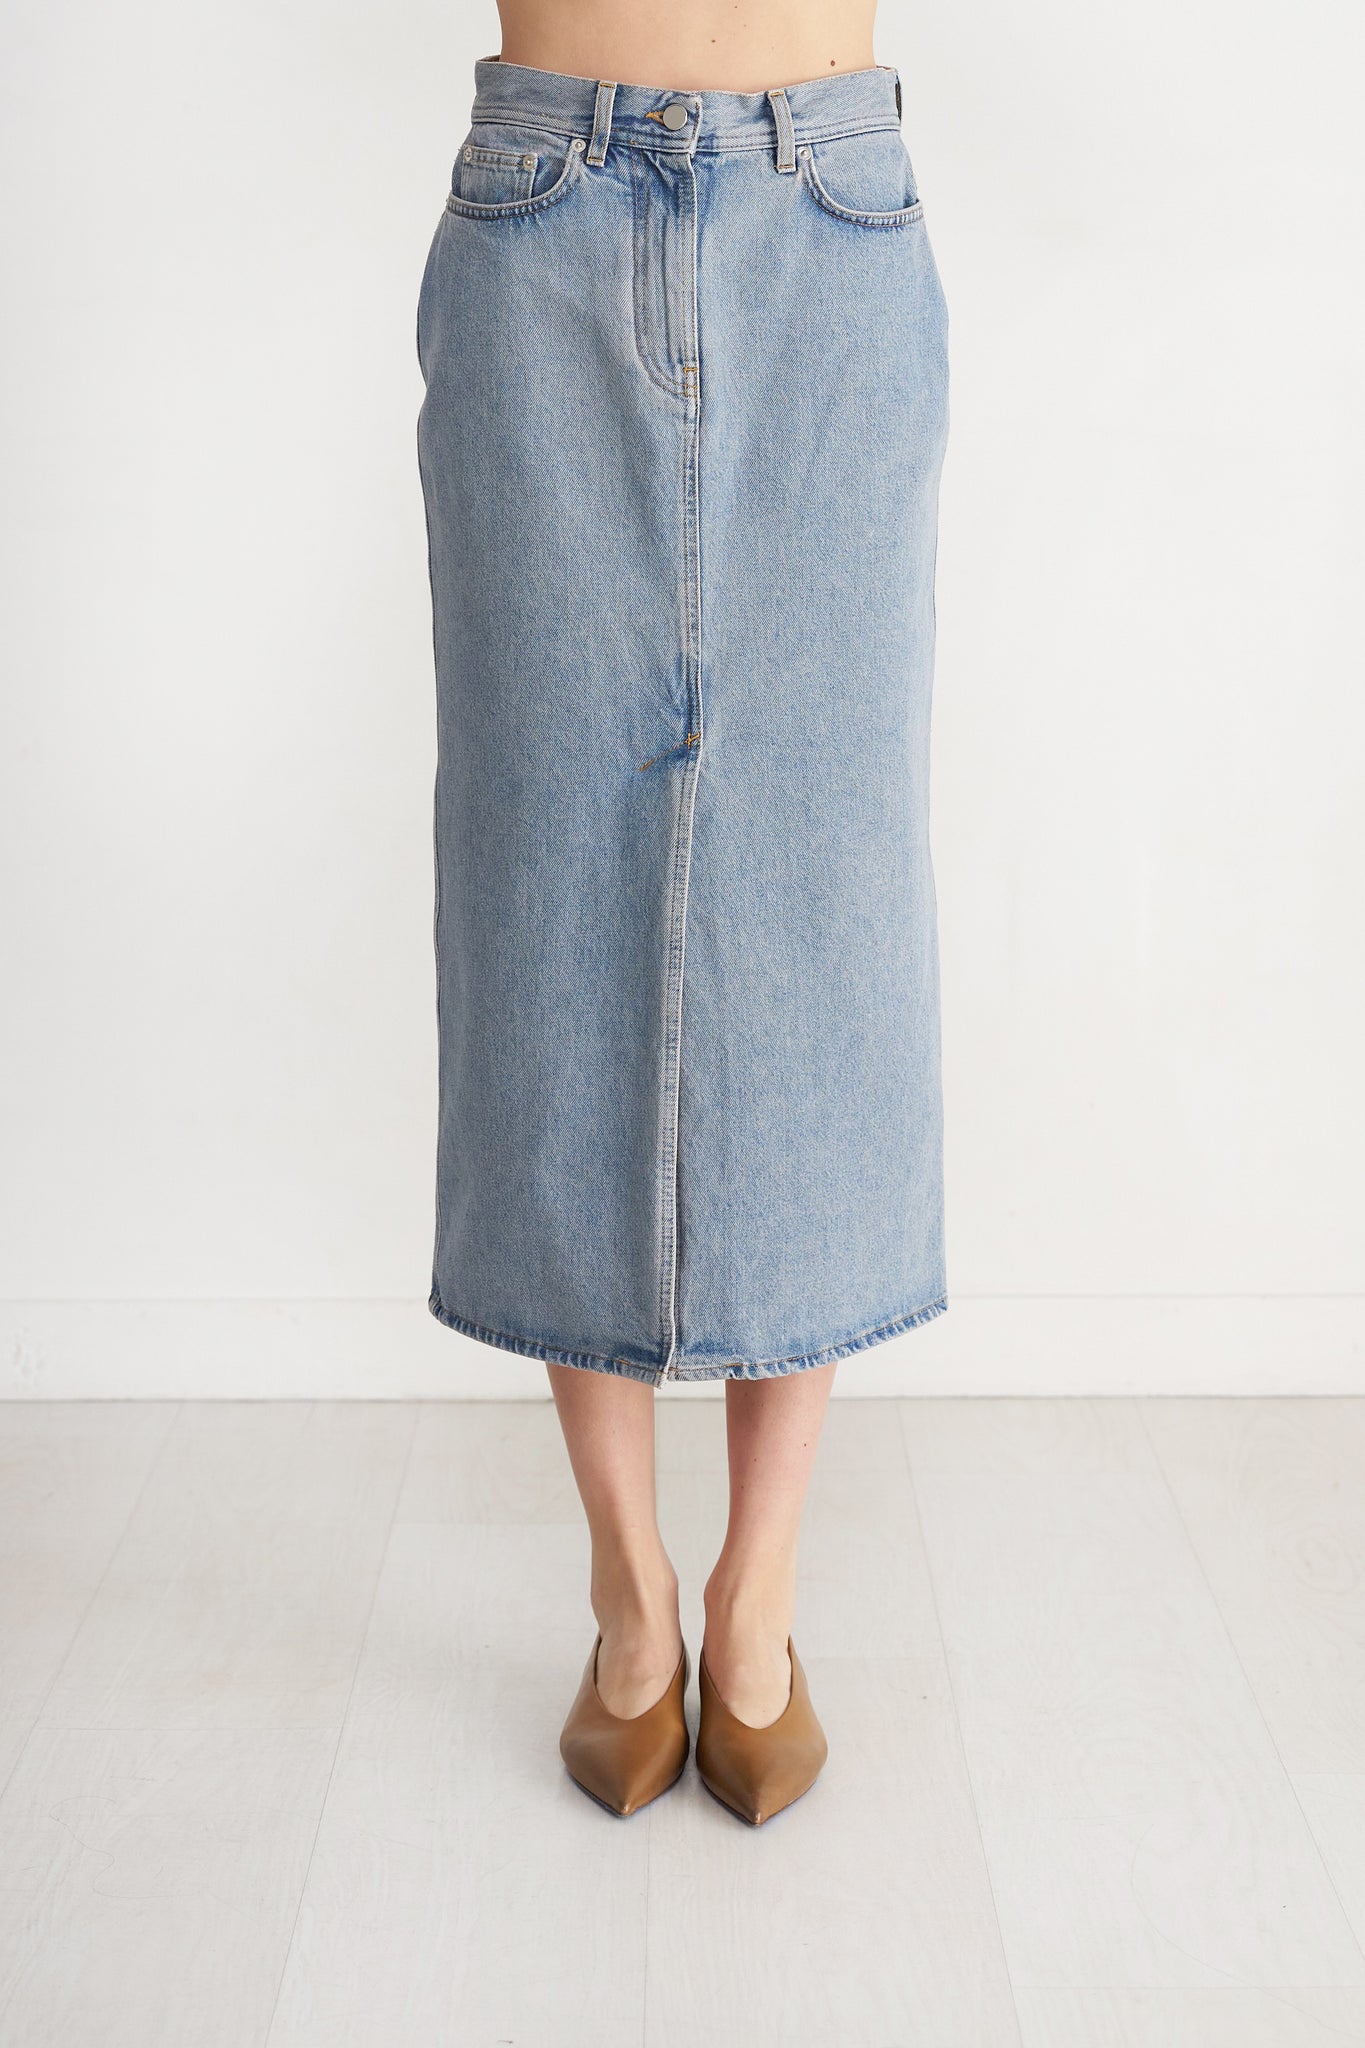 LOULOU STUDIO - Rona Long Denim Skirt, Washed Light Blue